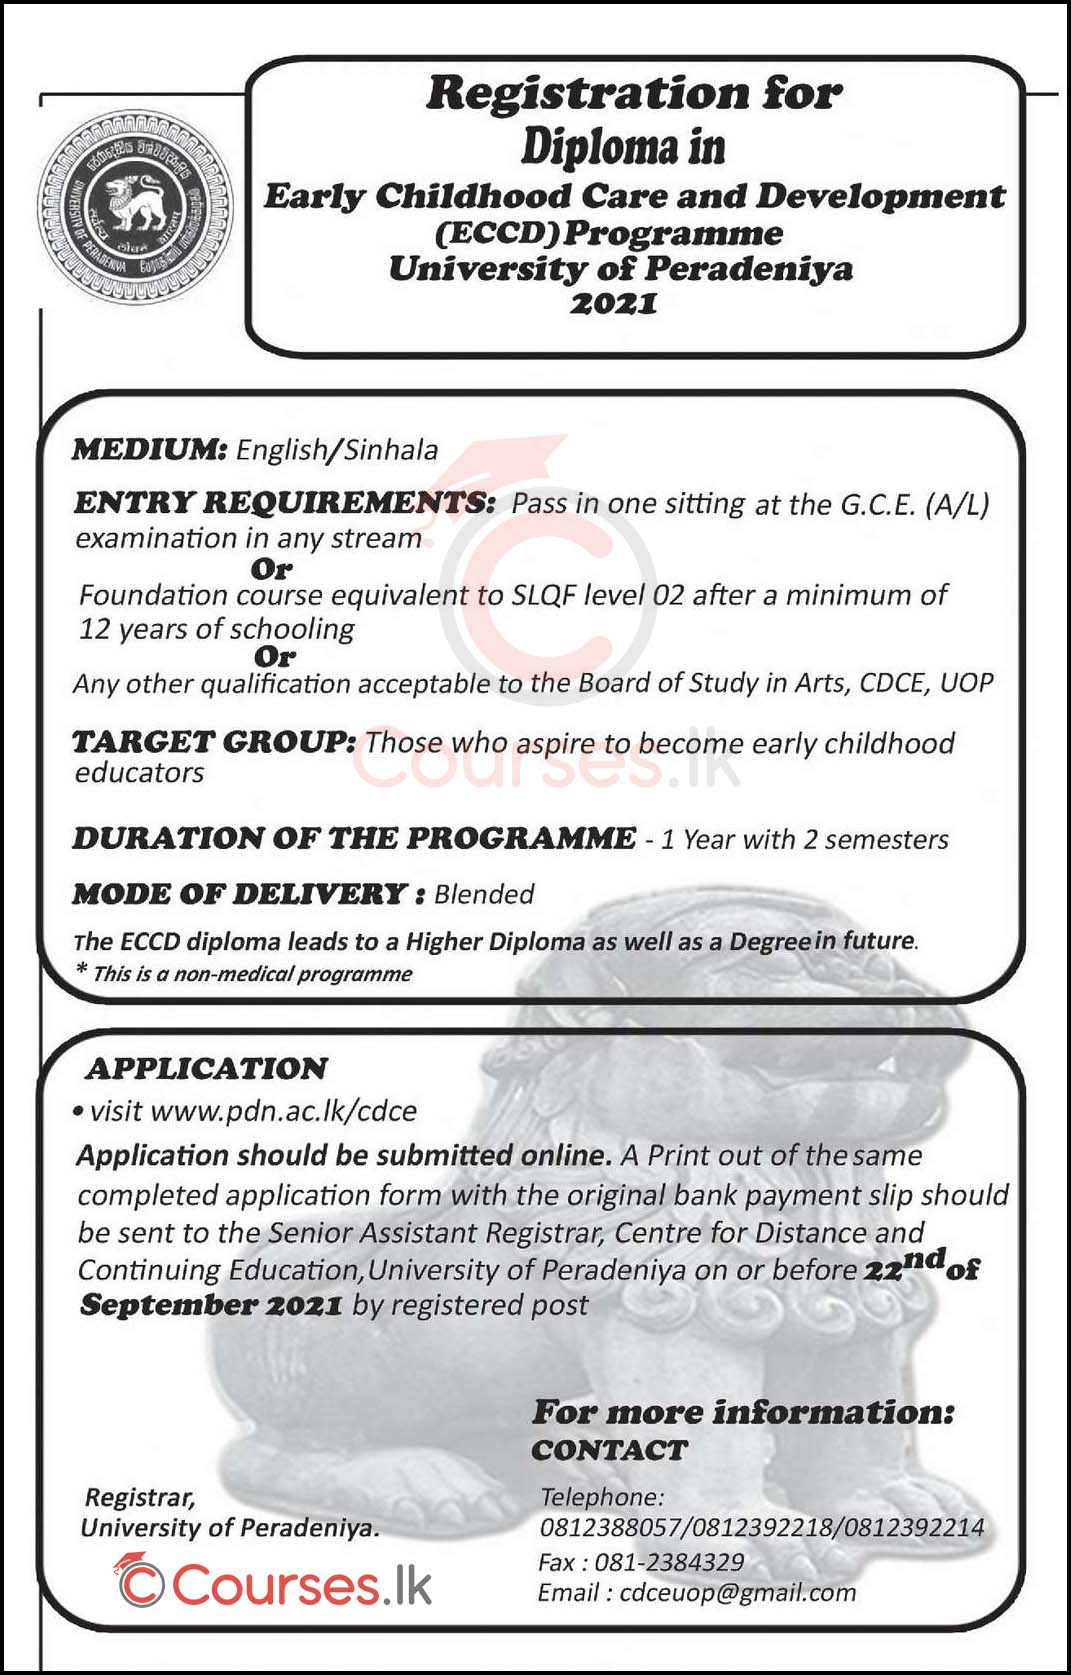 Diploma in Early Childhood Care and Development (ECCD) 2021 - University of Peradeniya